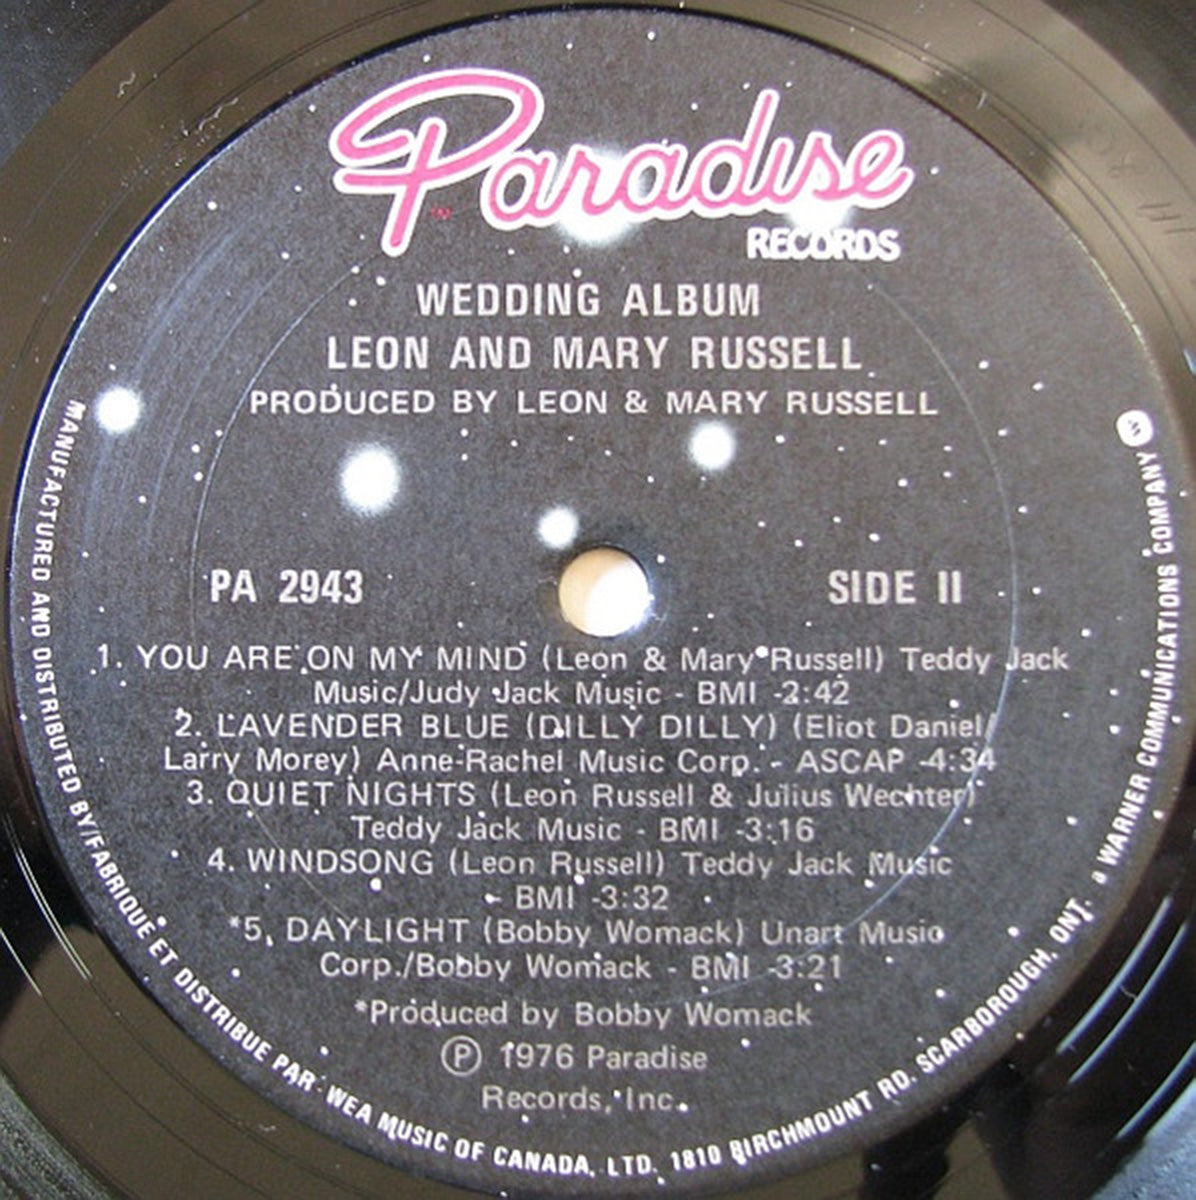 Leon & Mary Russell – Wedding Album - 1976